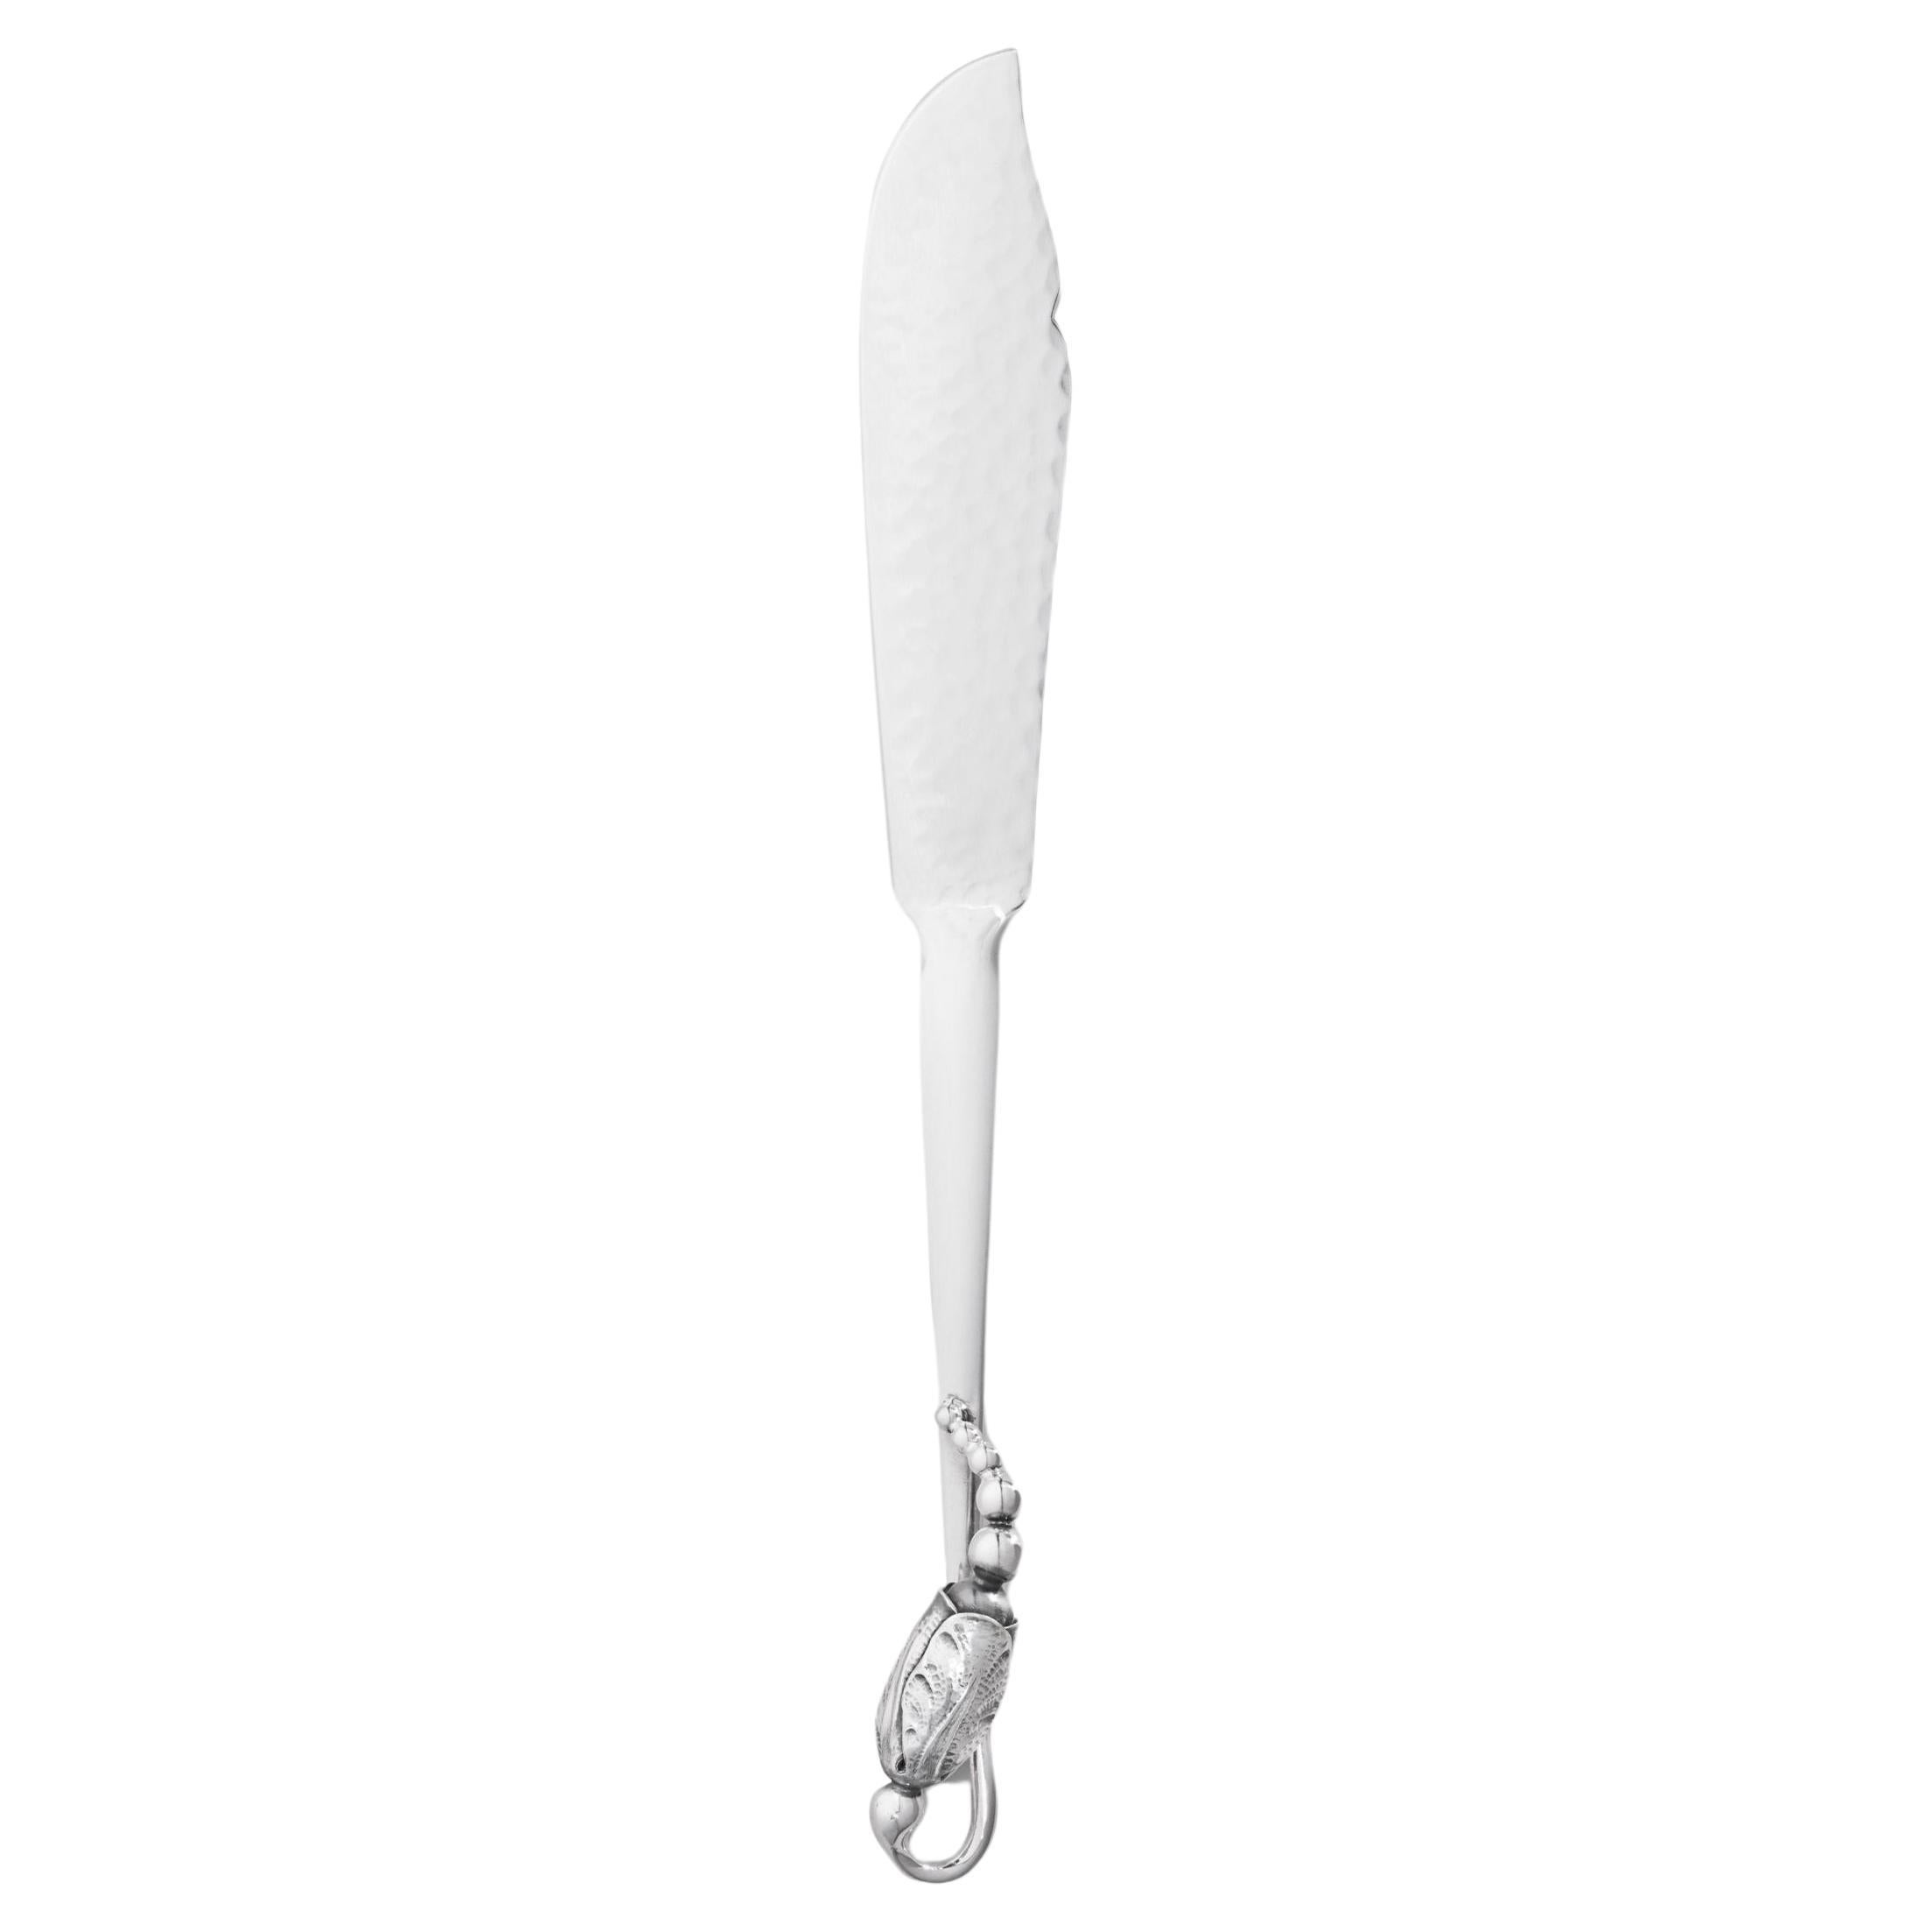 New Georg Jensen Blossom Sterling Silver Fish Knife 062